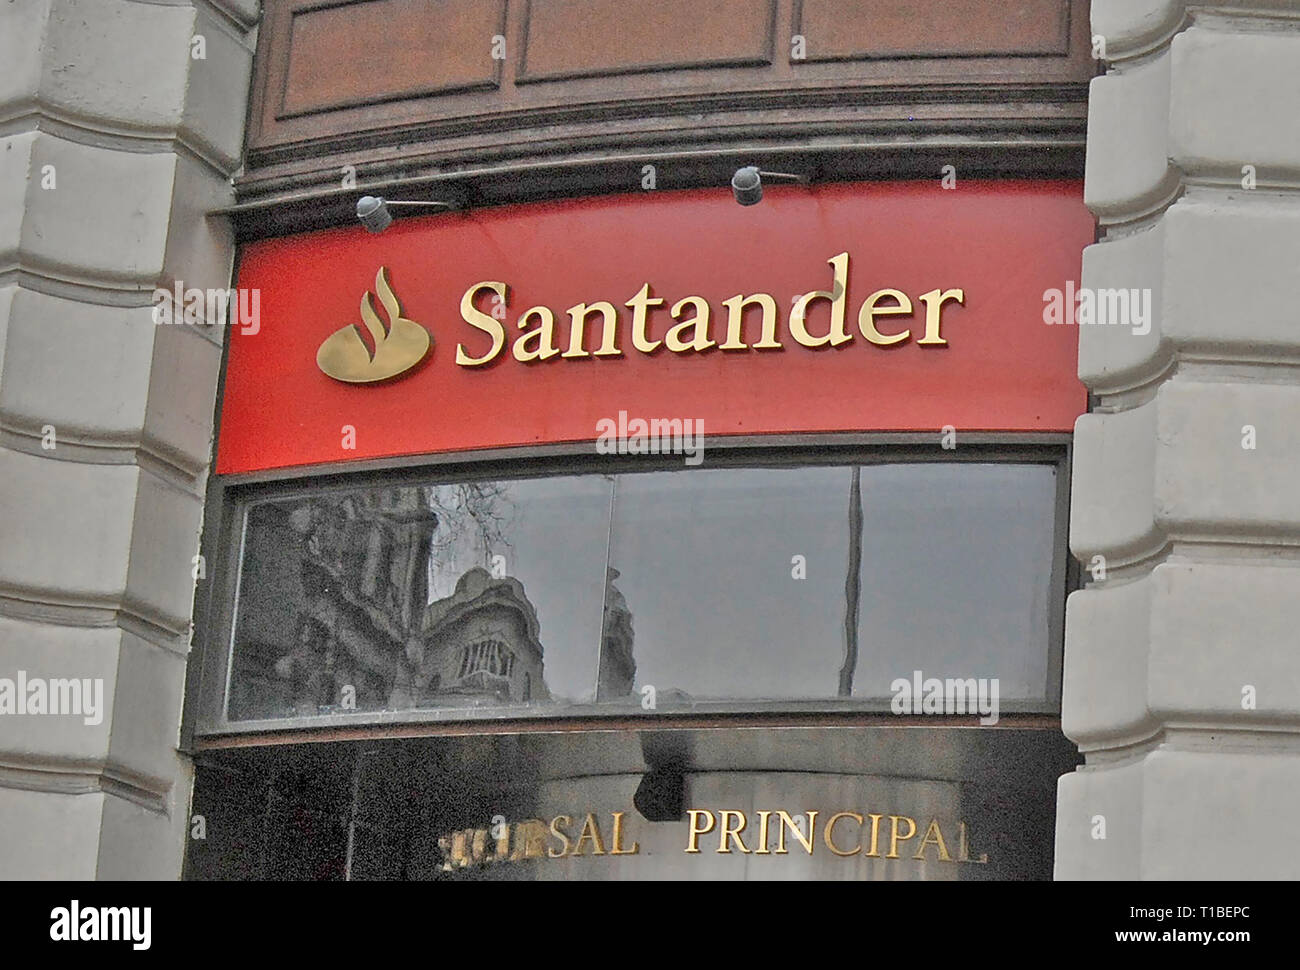 Santander bank, sucursal principal,  Madrid, Spain Stock Photo